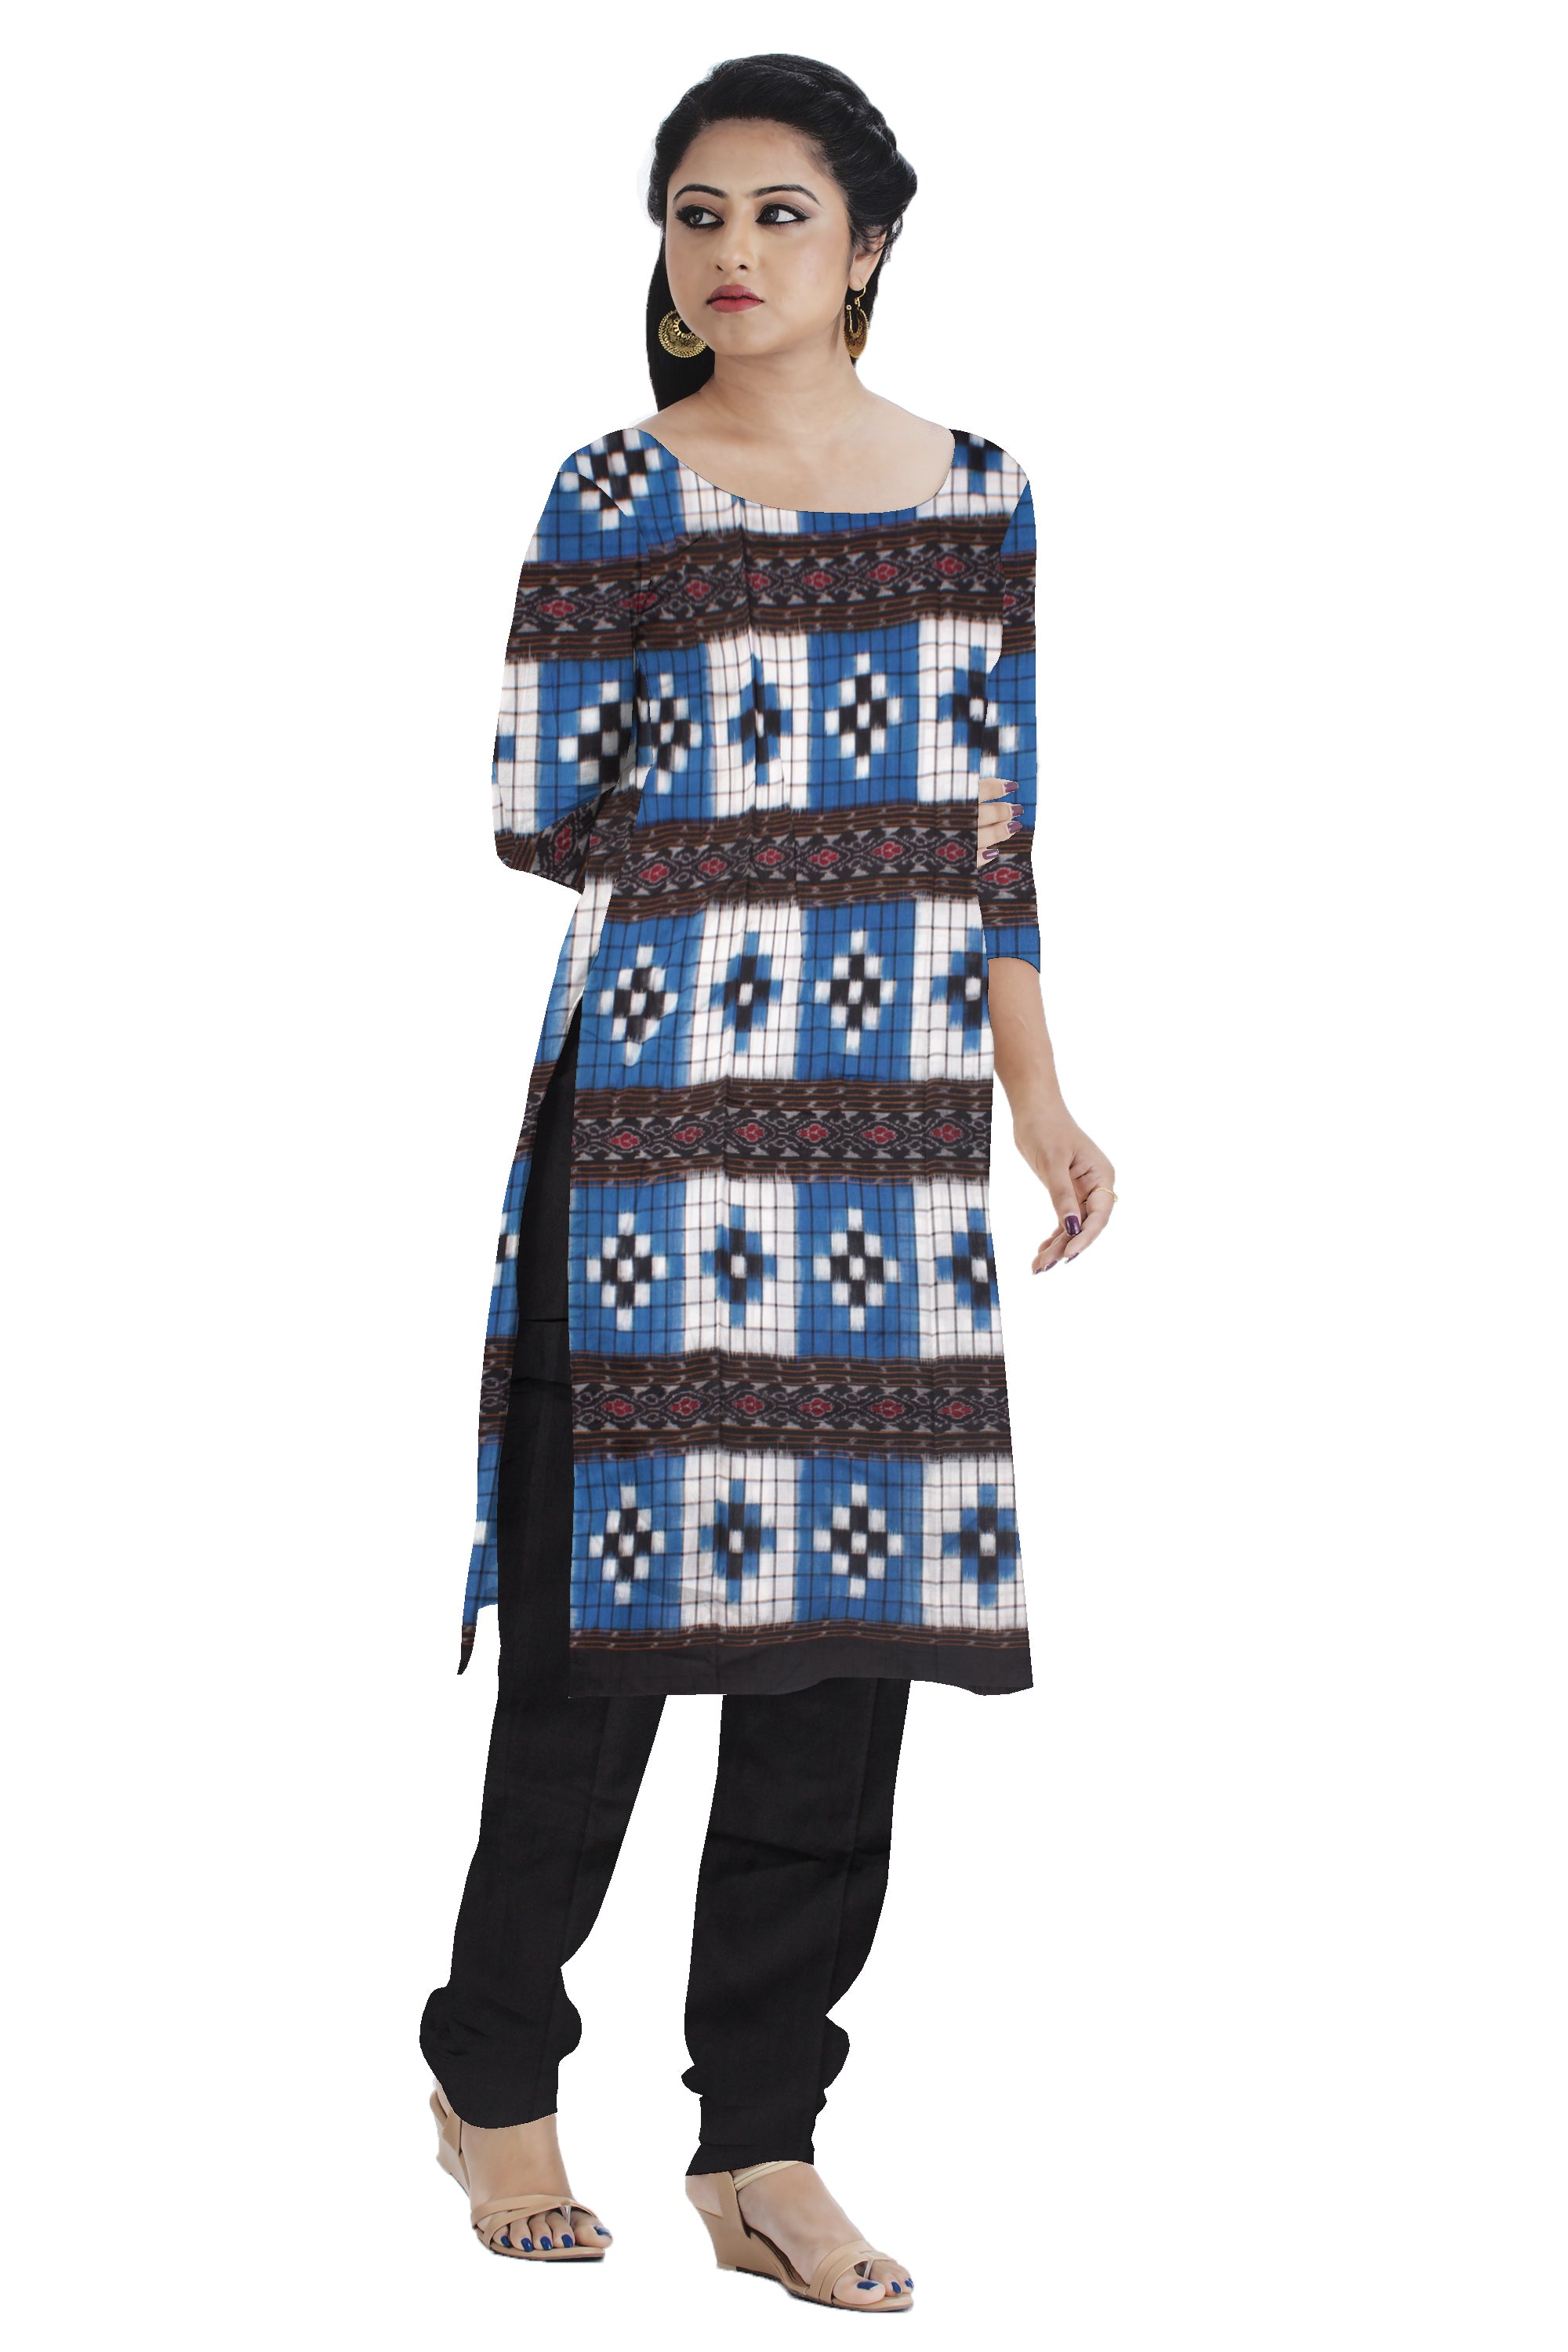 Cotton Dress Material in Beautiful  Sky blue and Black color with Pasapali design. Contrast Dupatta  UNSTITCHED DRESS SET - Koshali Arts & Crafts Enterprise